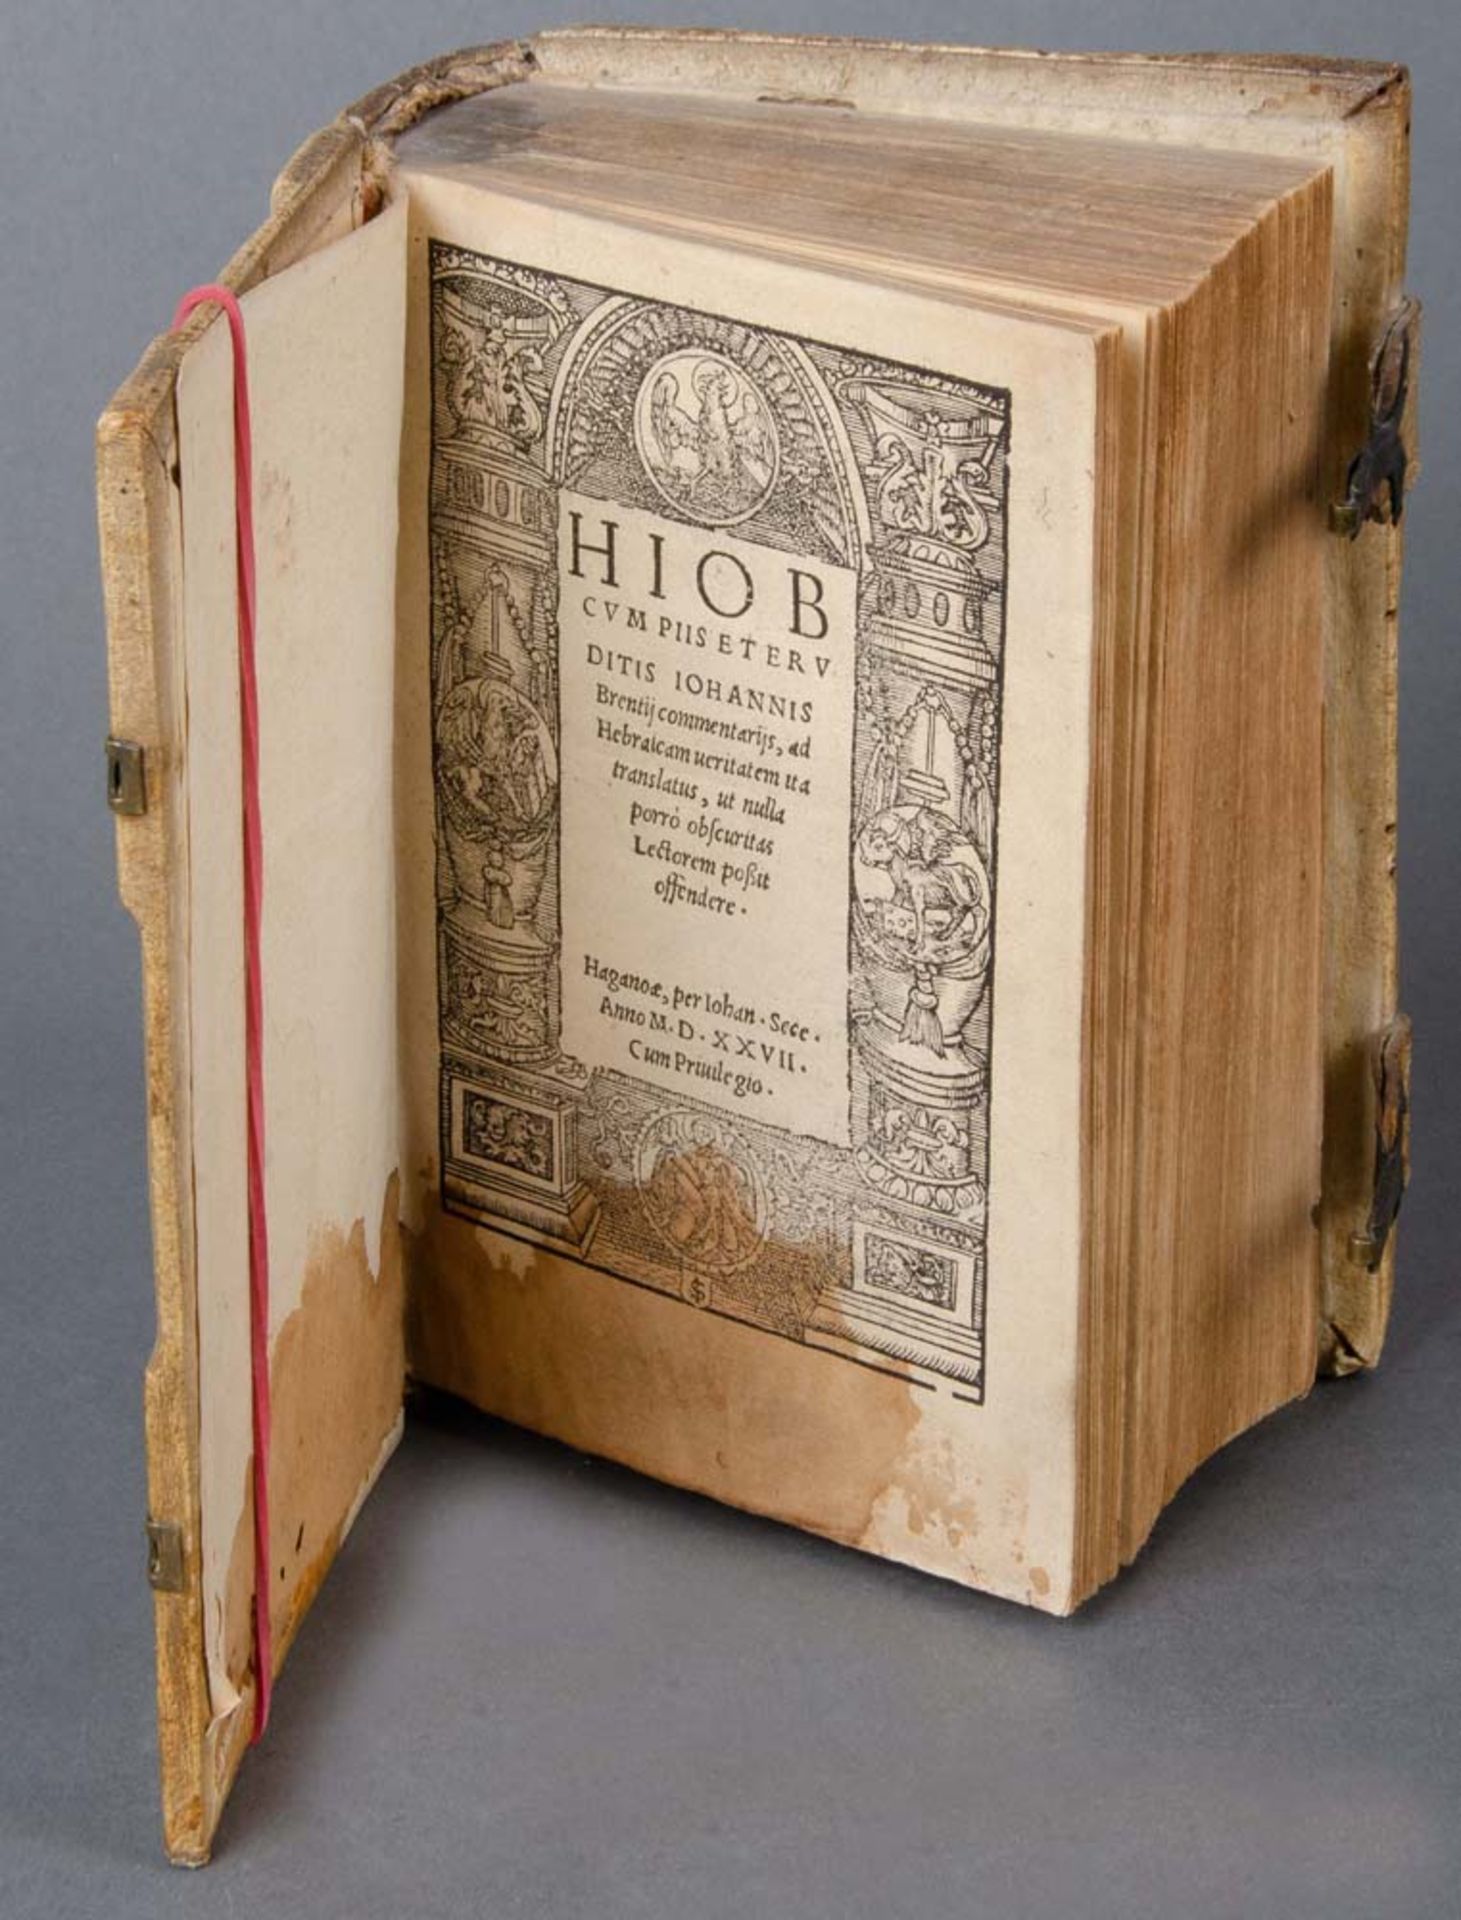 „HIOB CUM PIIS ETERV DITIS JOHANNIS“, geprägter Ganzleder-Bd. mit Messingschließen, o.O. 1527.